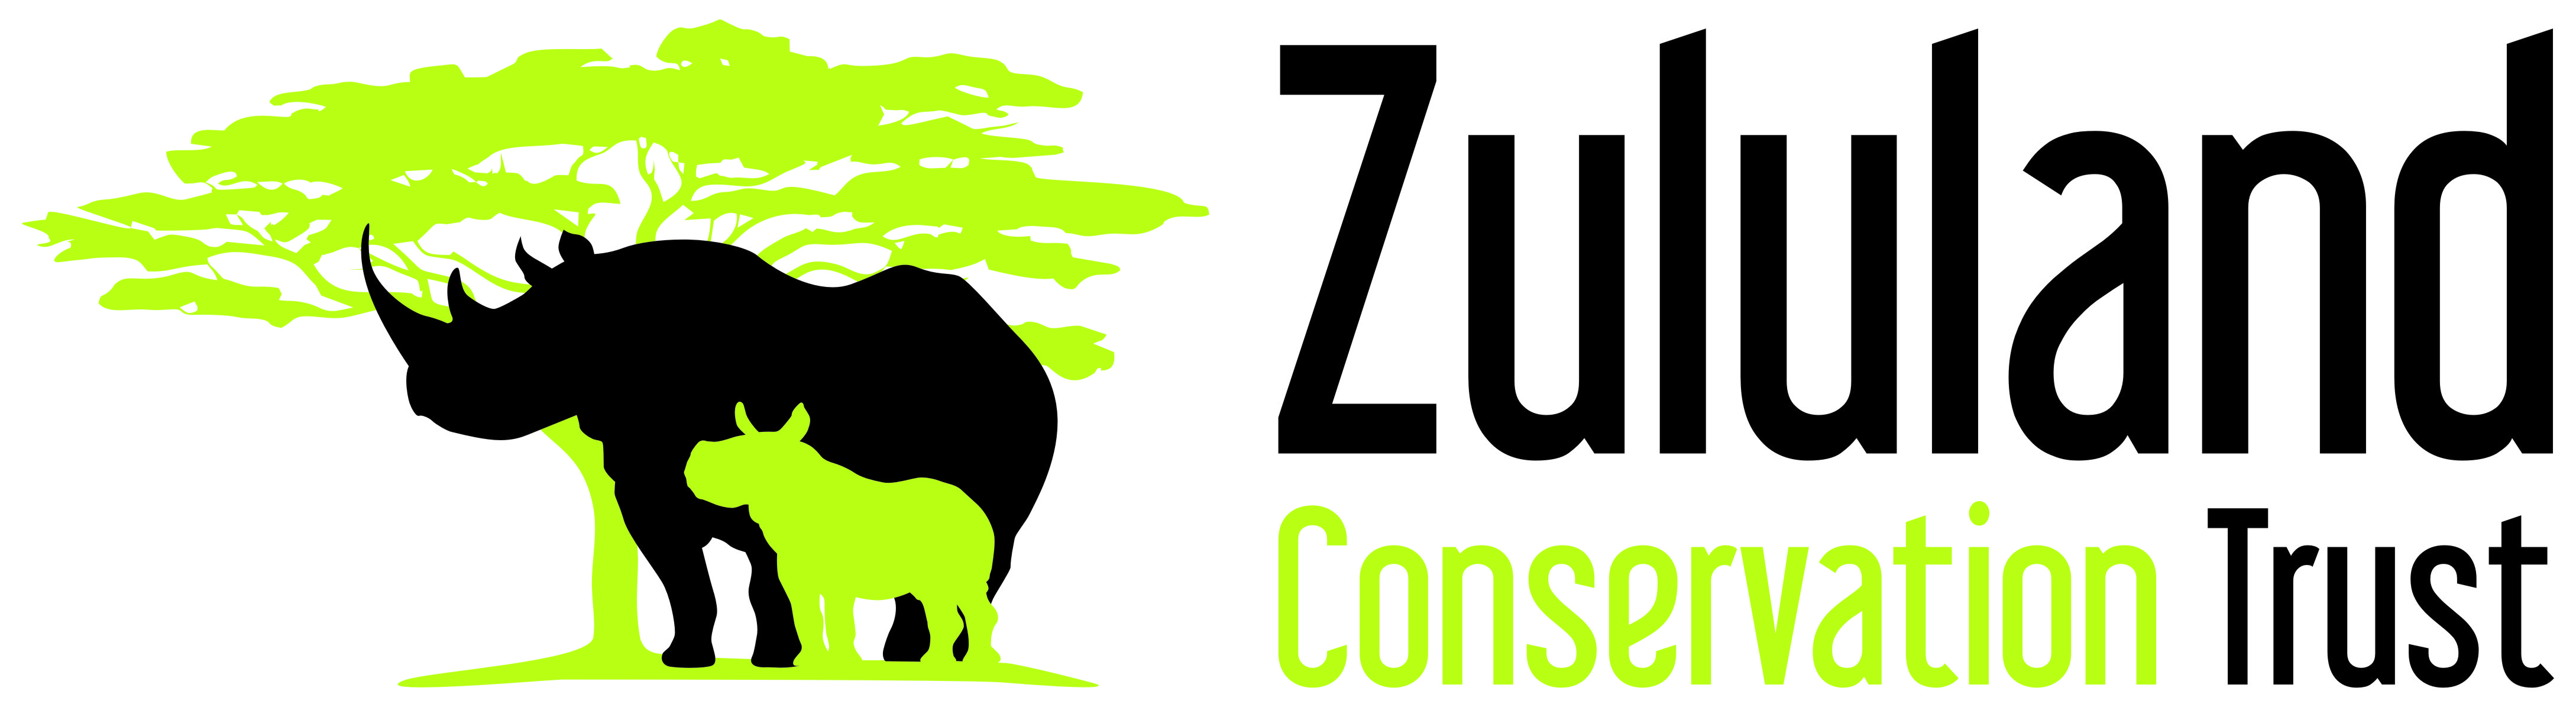 Zululand Conservation Trust